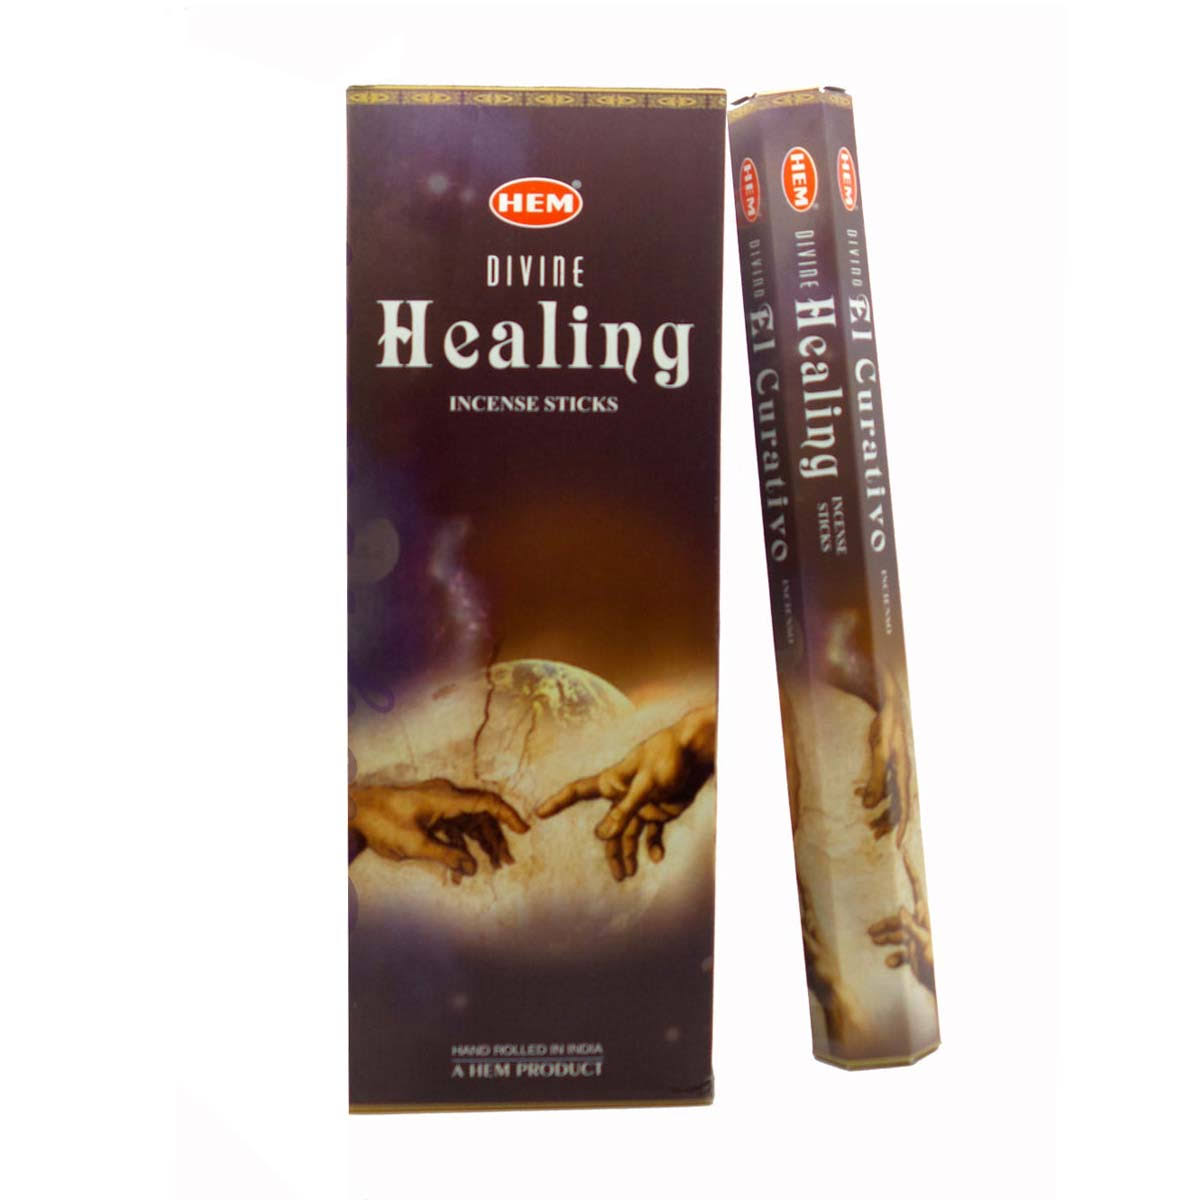 Hem Incense Sticks - Divine Healing